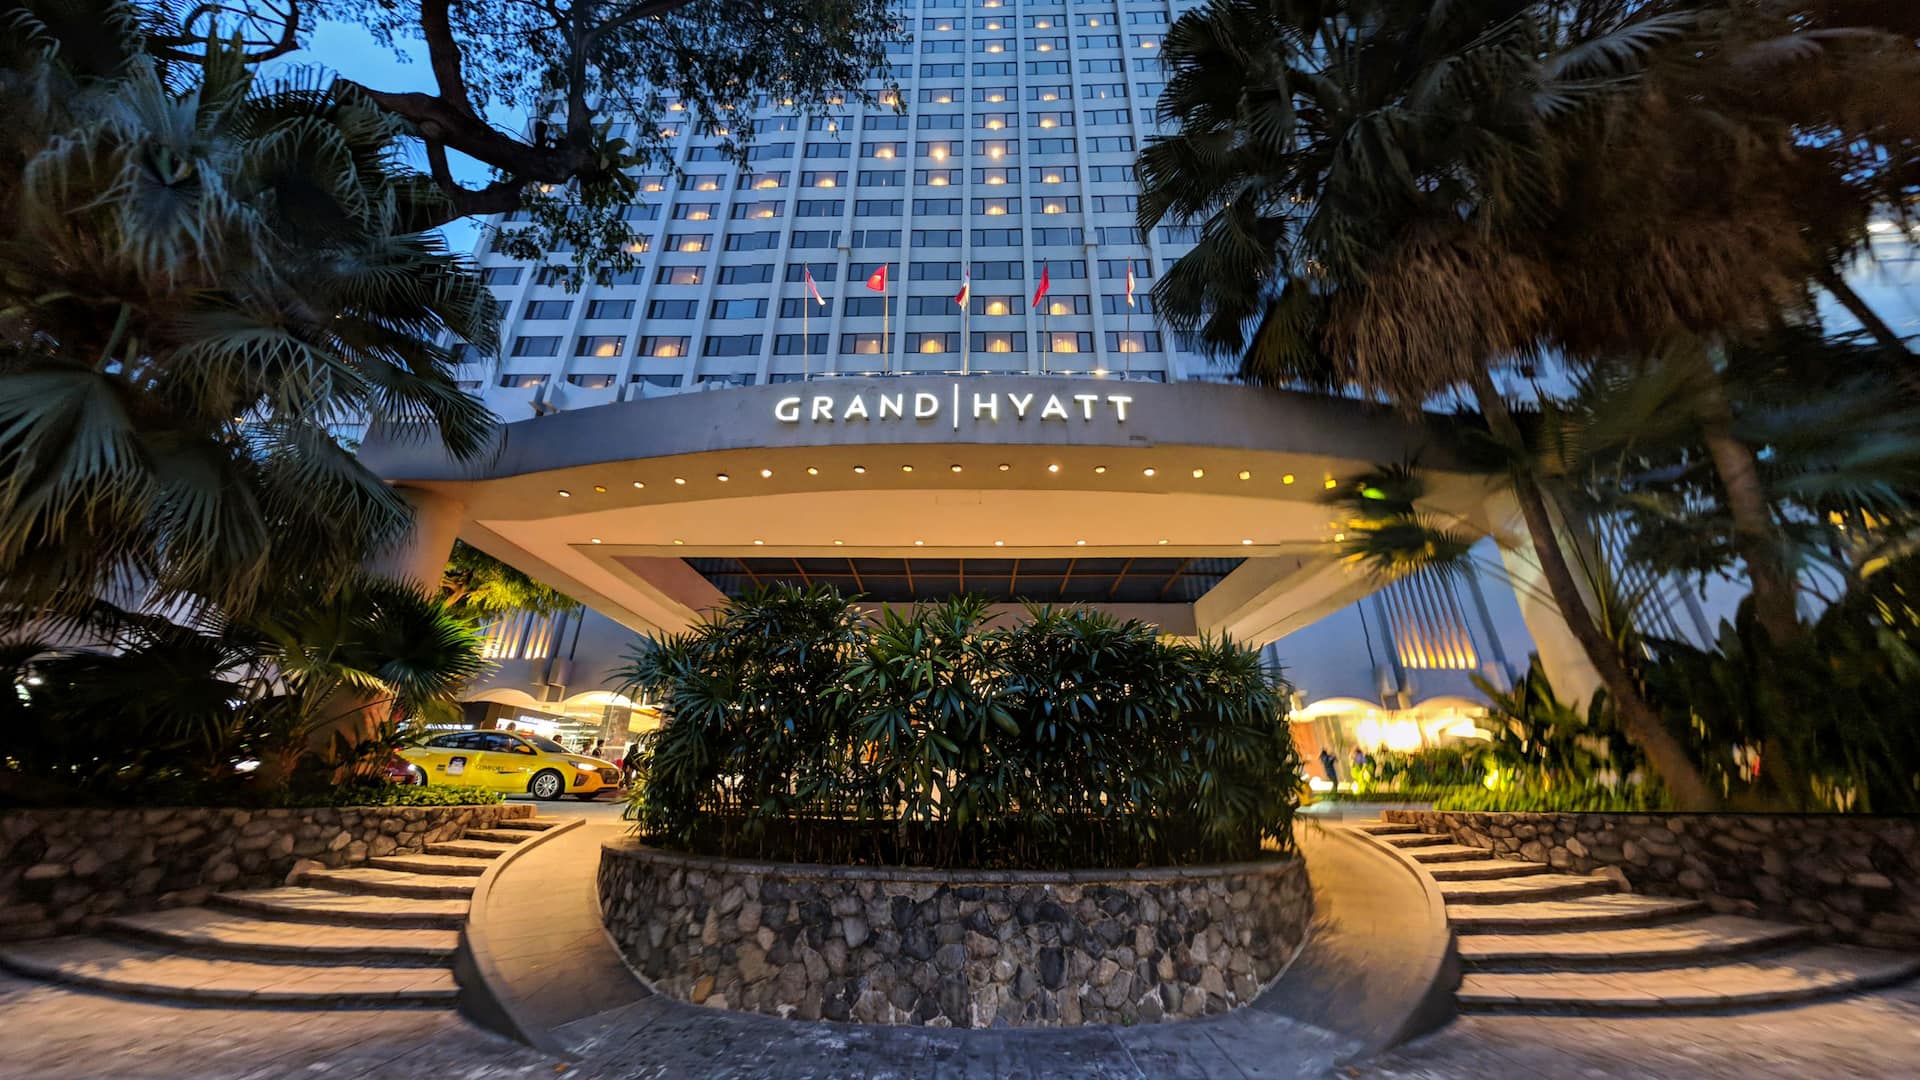 Grand Hyatt Singapore Hotel Exterior at Evening